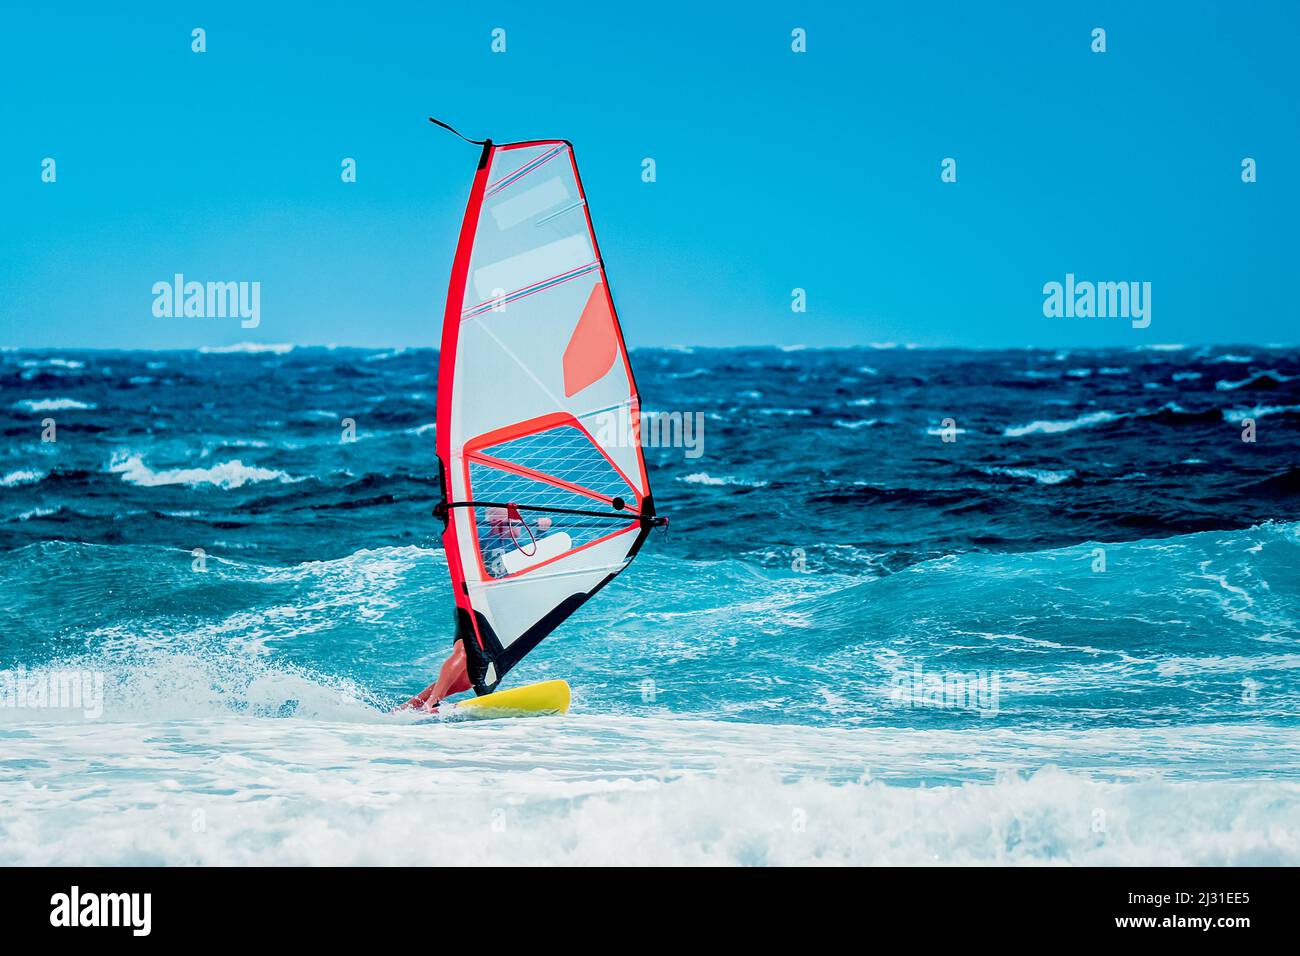 summer sport: windsurfer riding among waves on the blue ocean Stock Photo